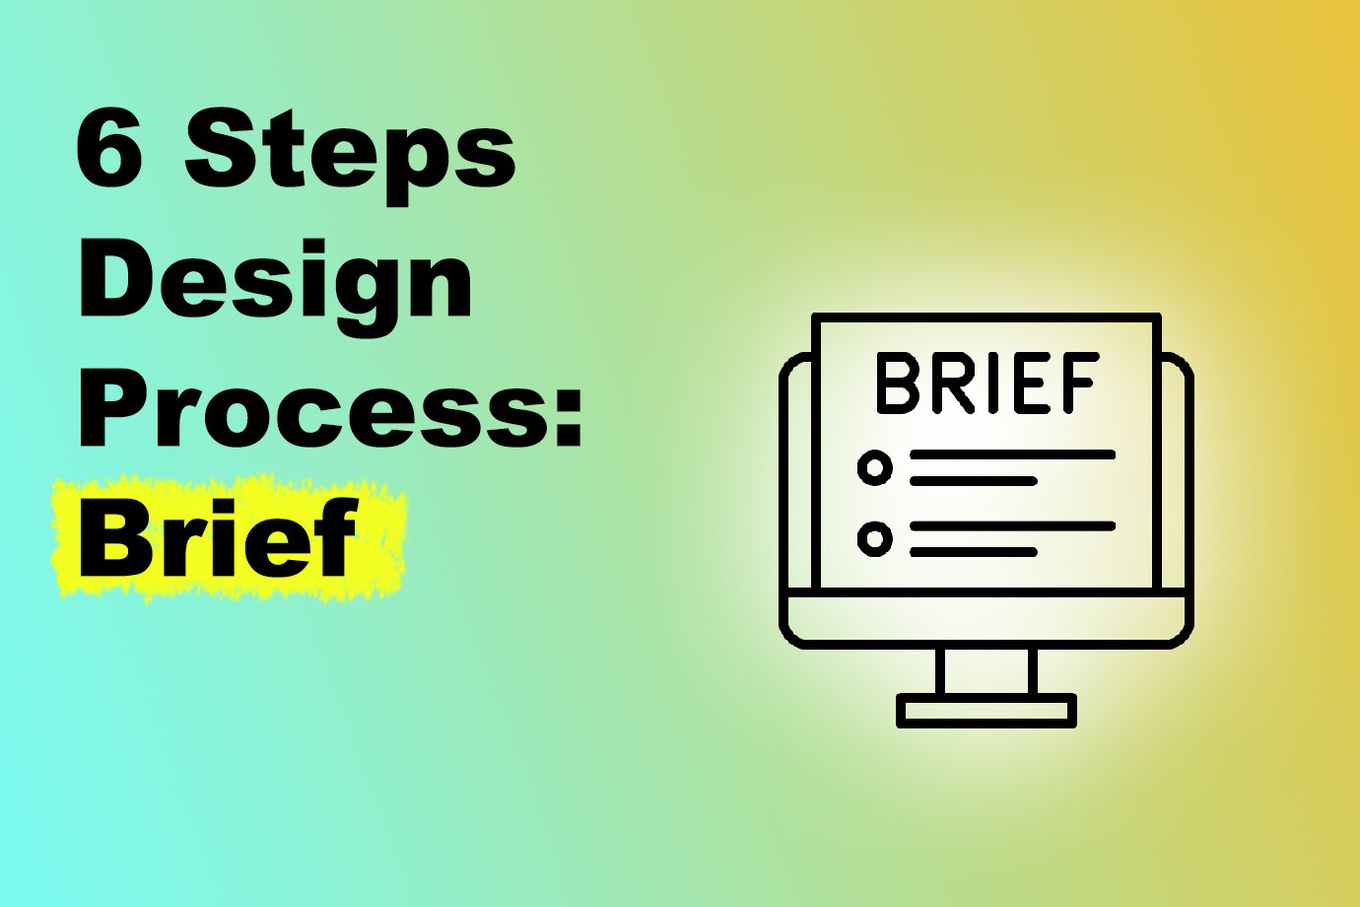 6 Steps Design Process, Brief